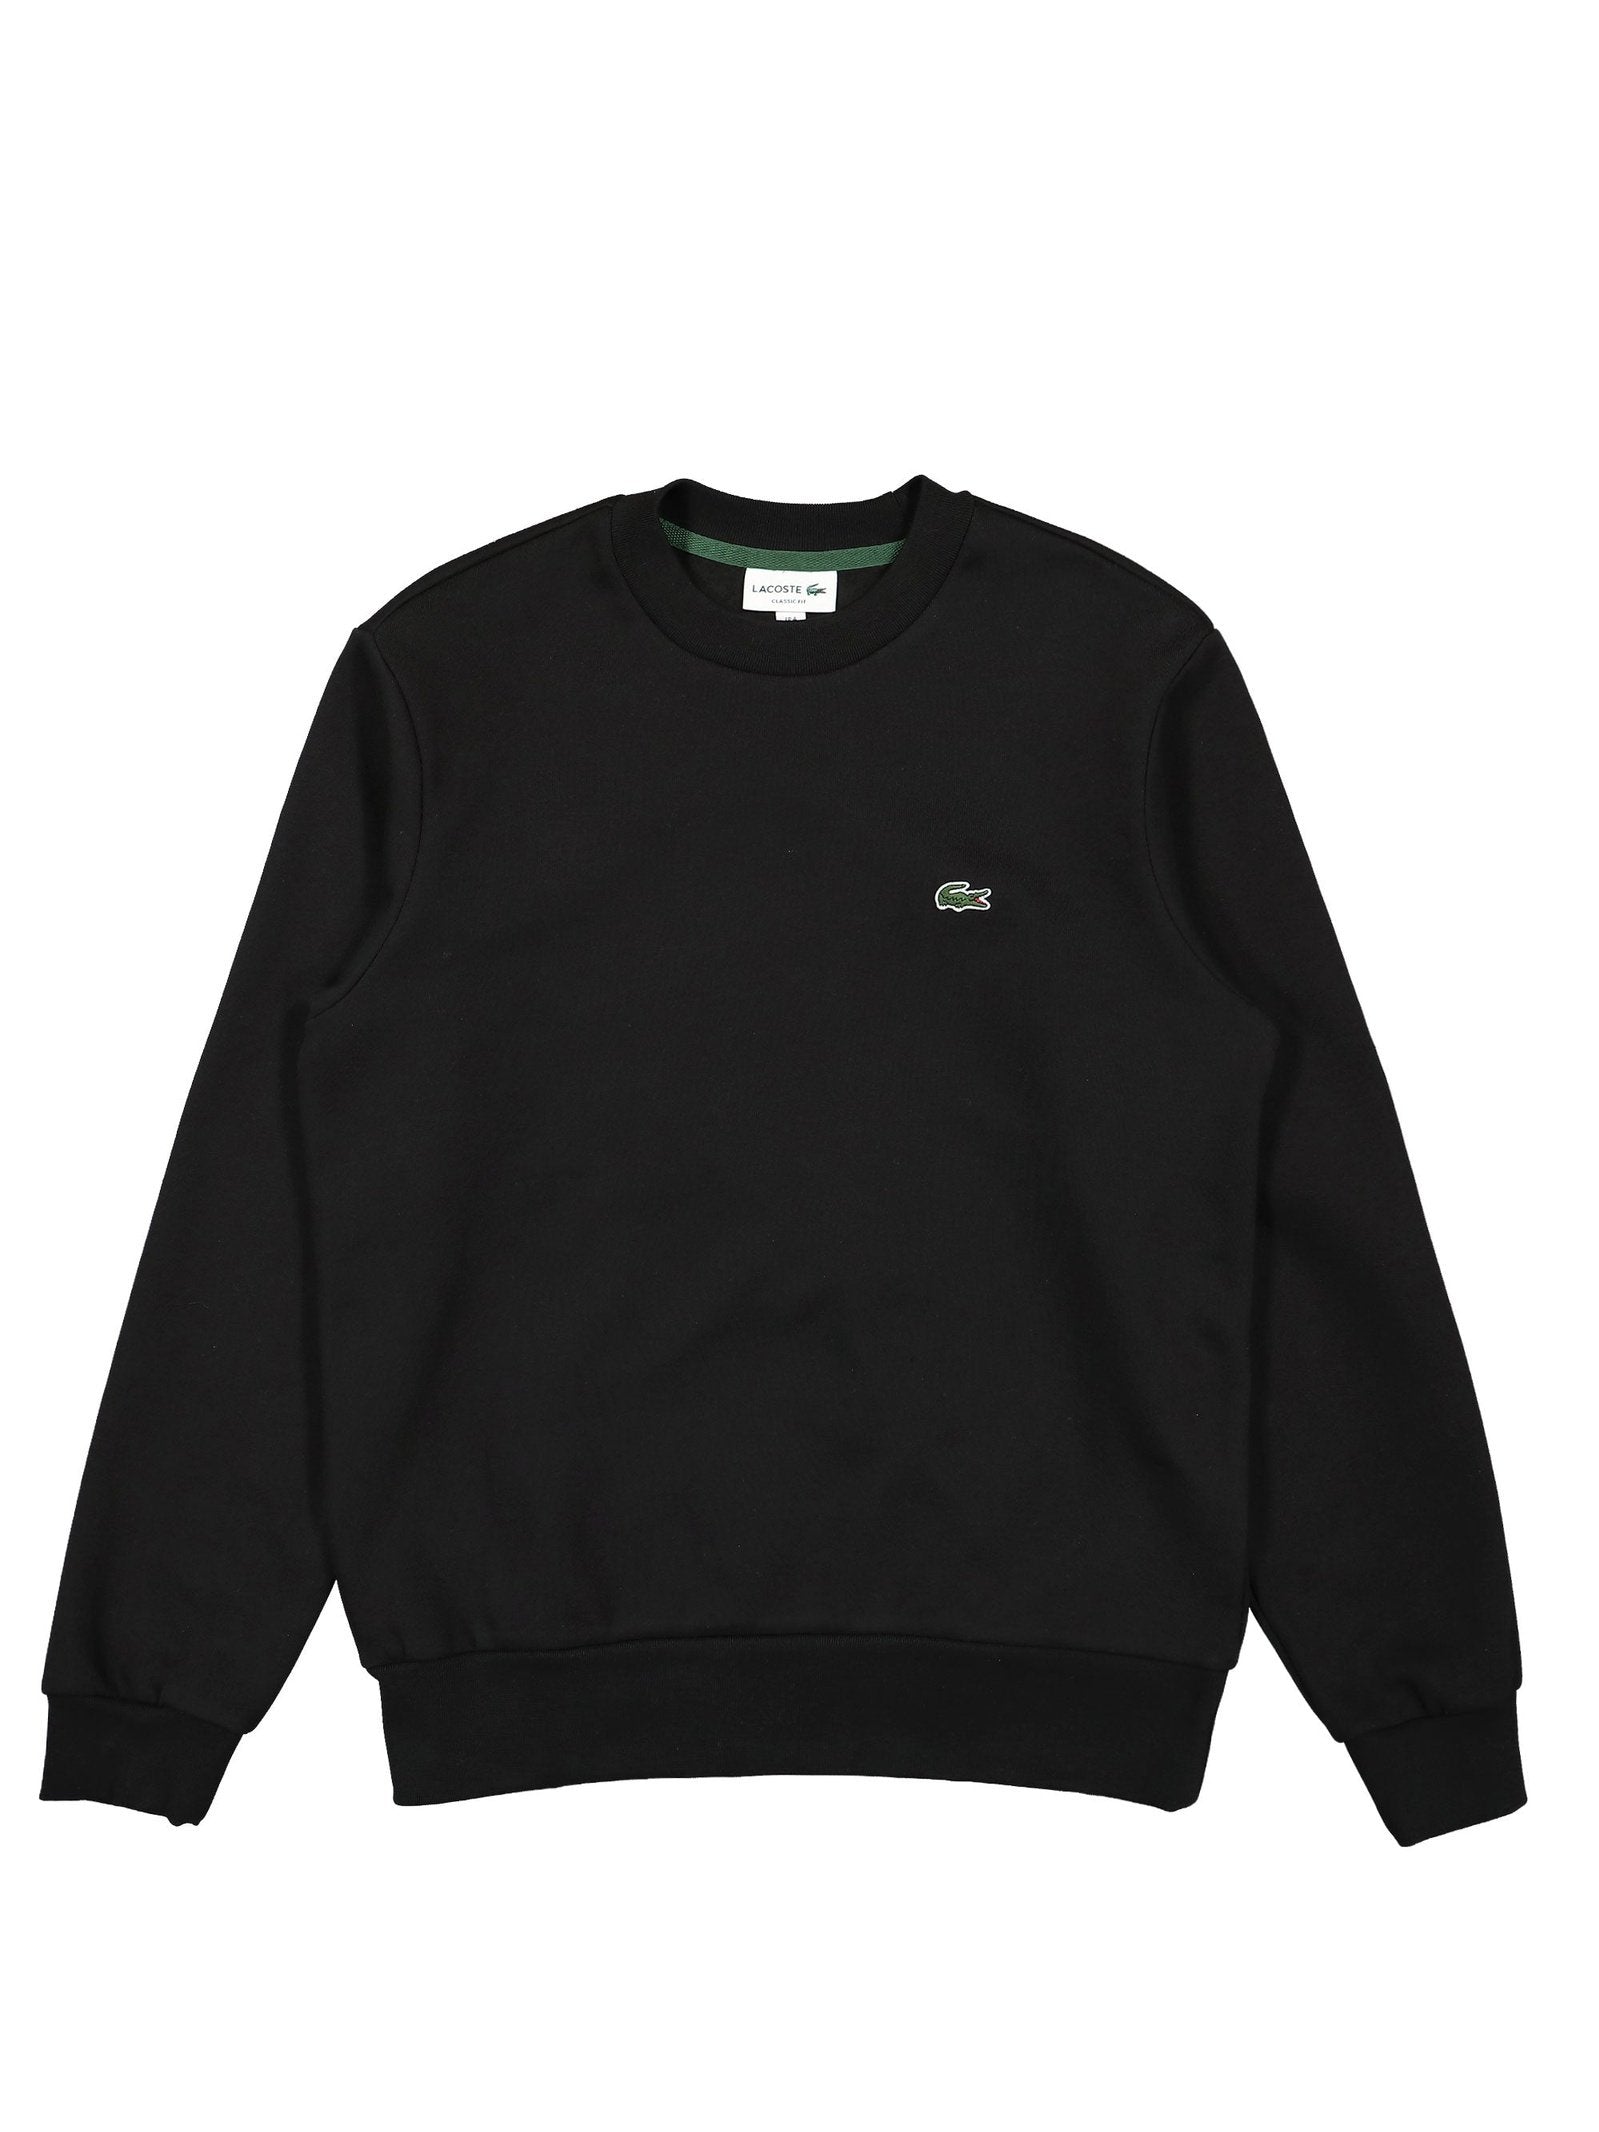 Lacoste Men's Organic Brushed Cotton Sweatshirt Black SH9608-51 031.